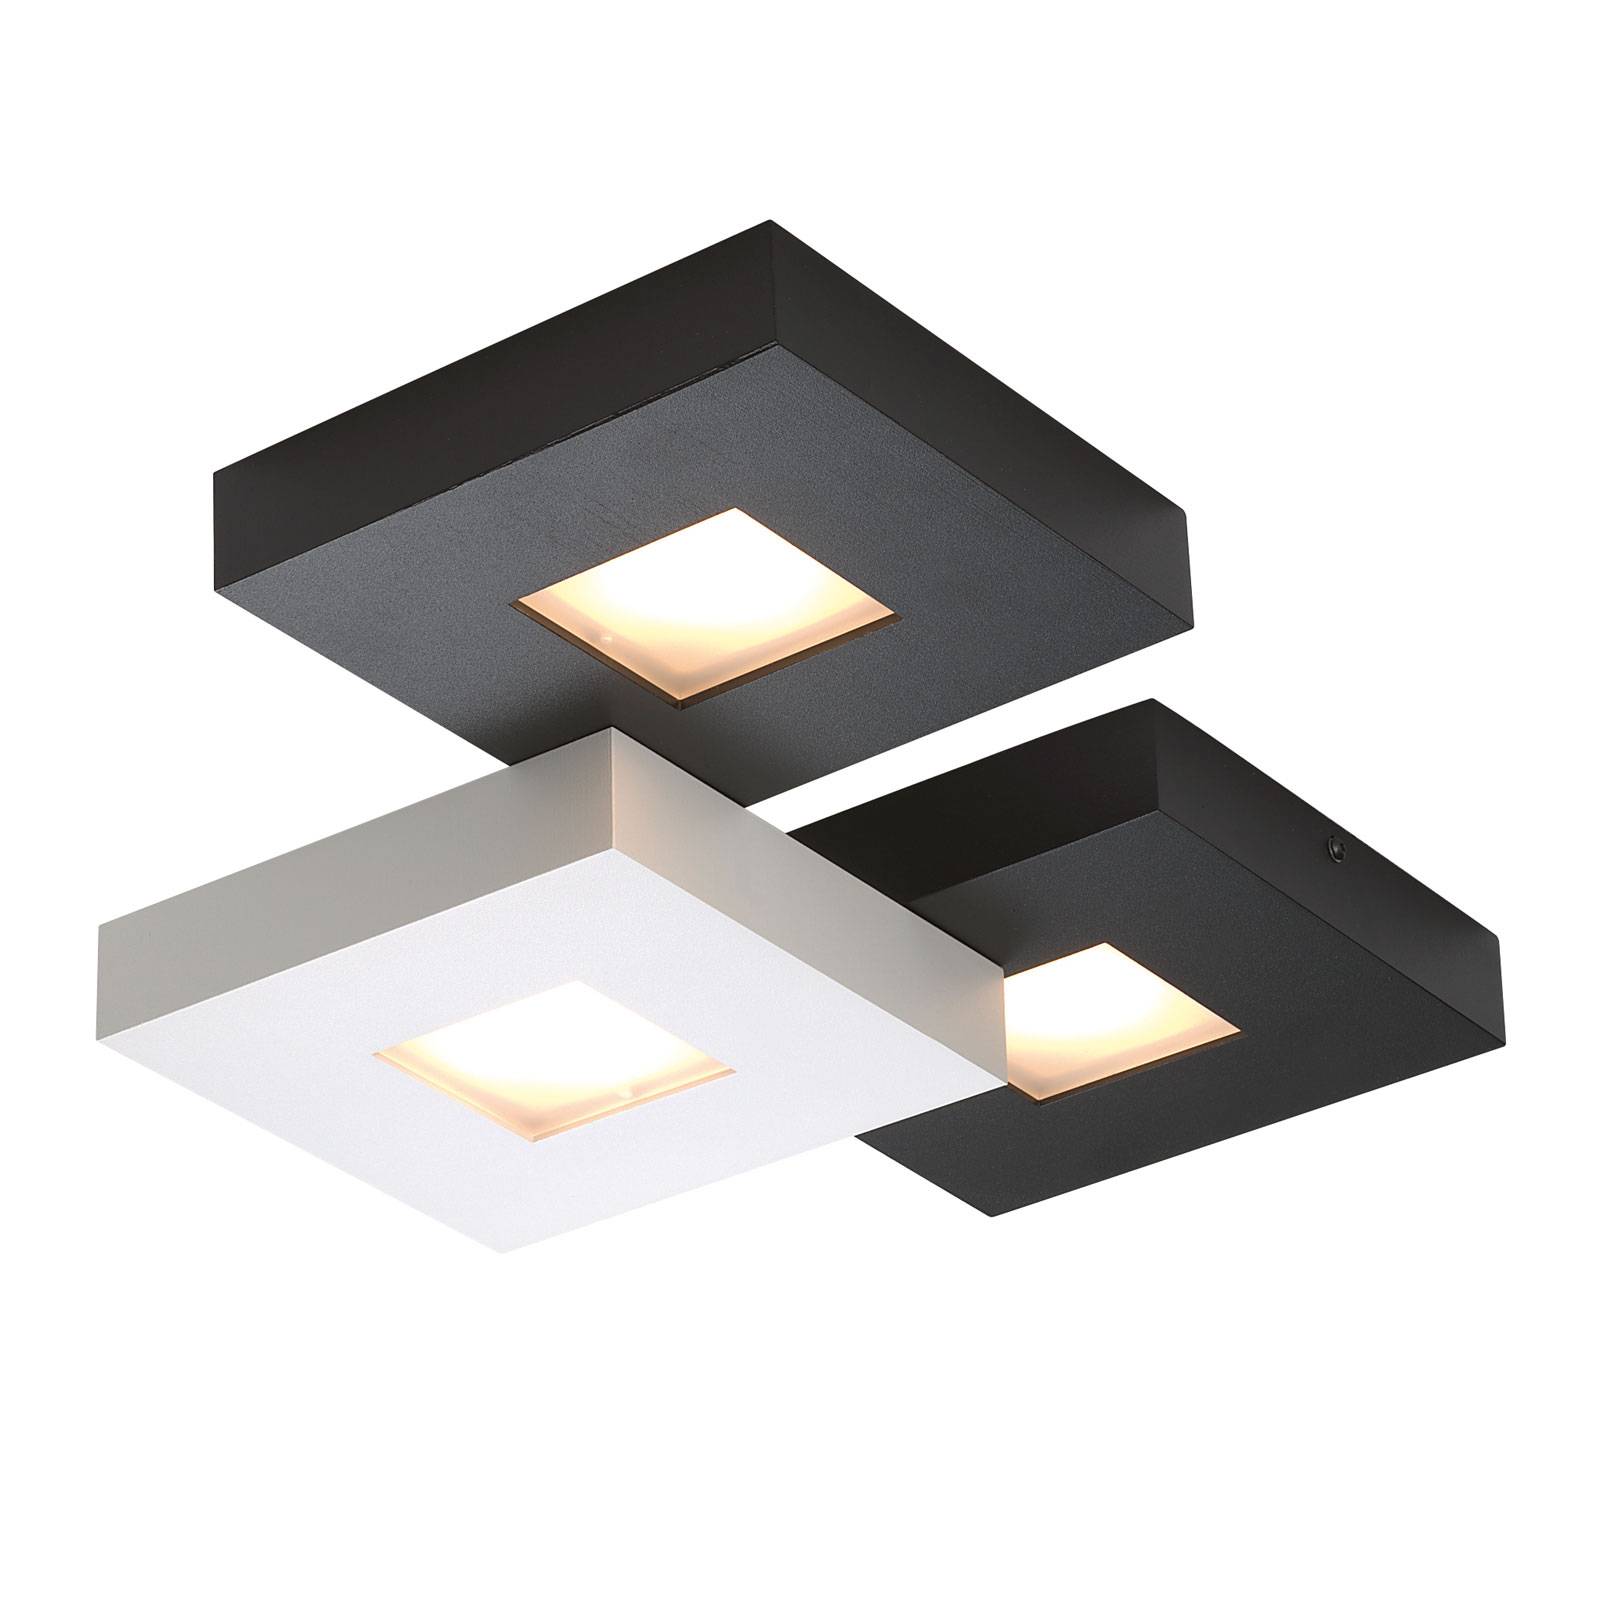 BOPP Bopp Cubus 3-flammige LED-Deckenlampe, schwarzweiß